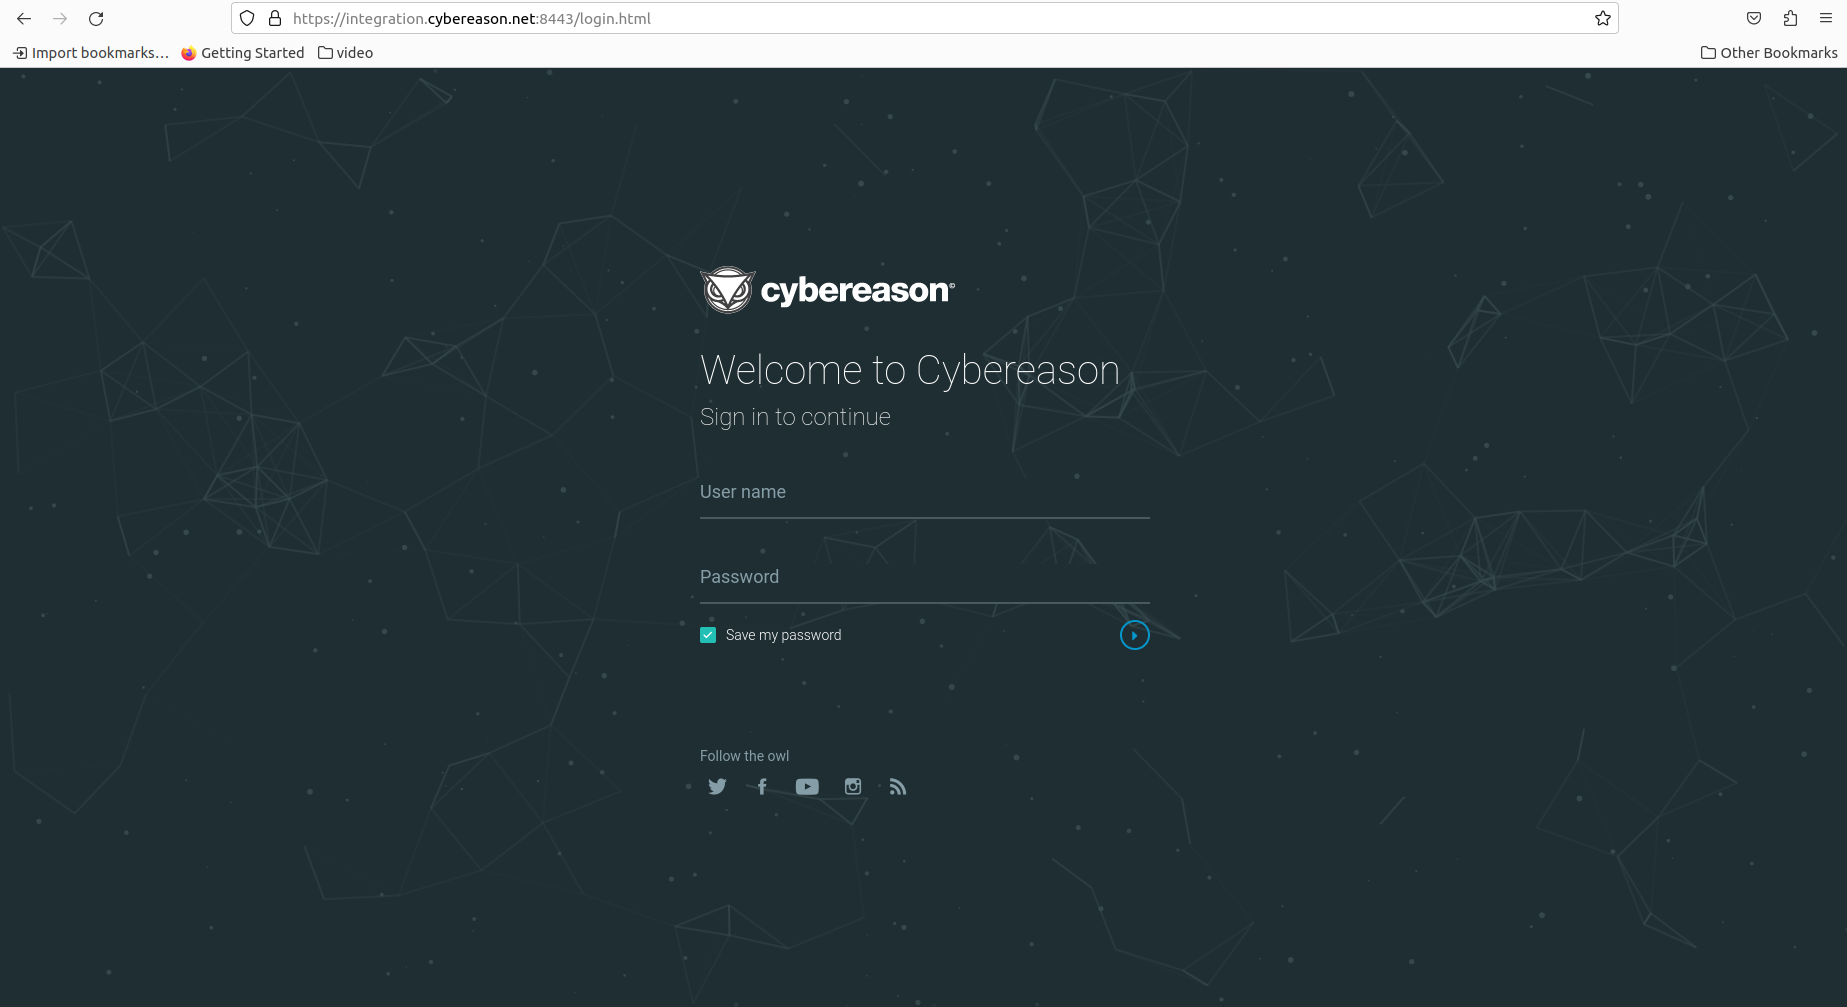 Cybereason_integration_edr_cybersecurity-2